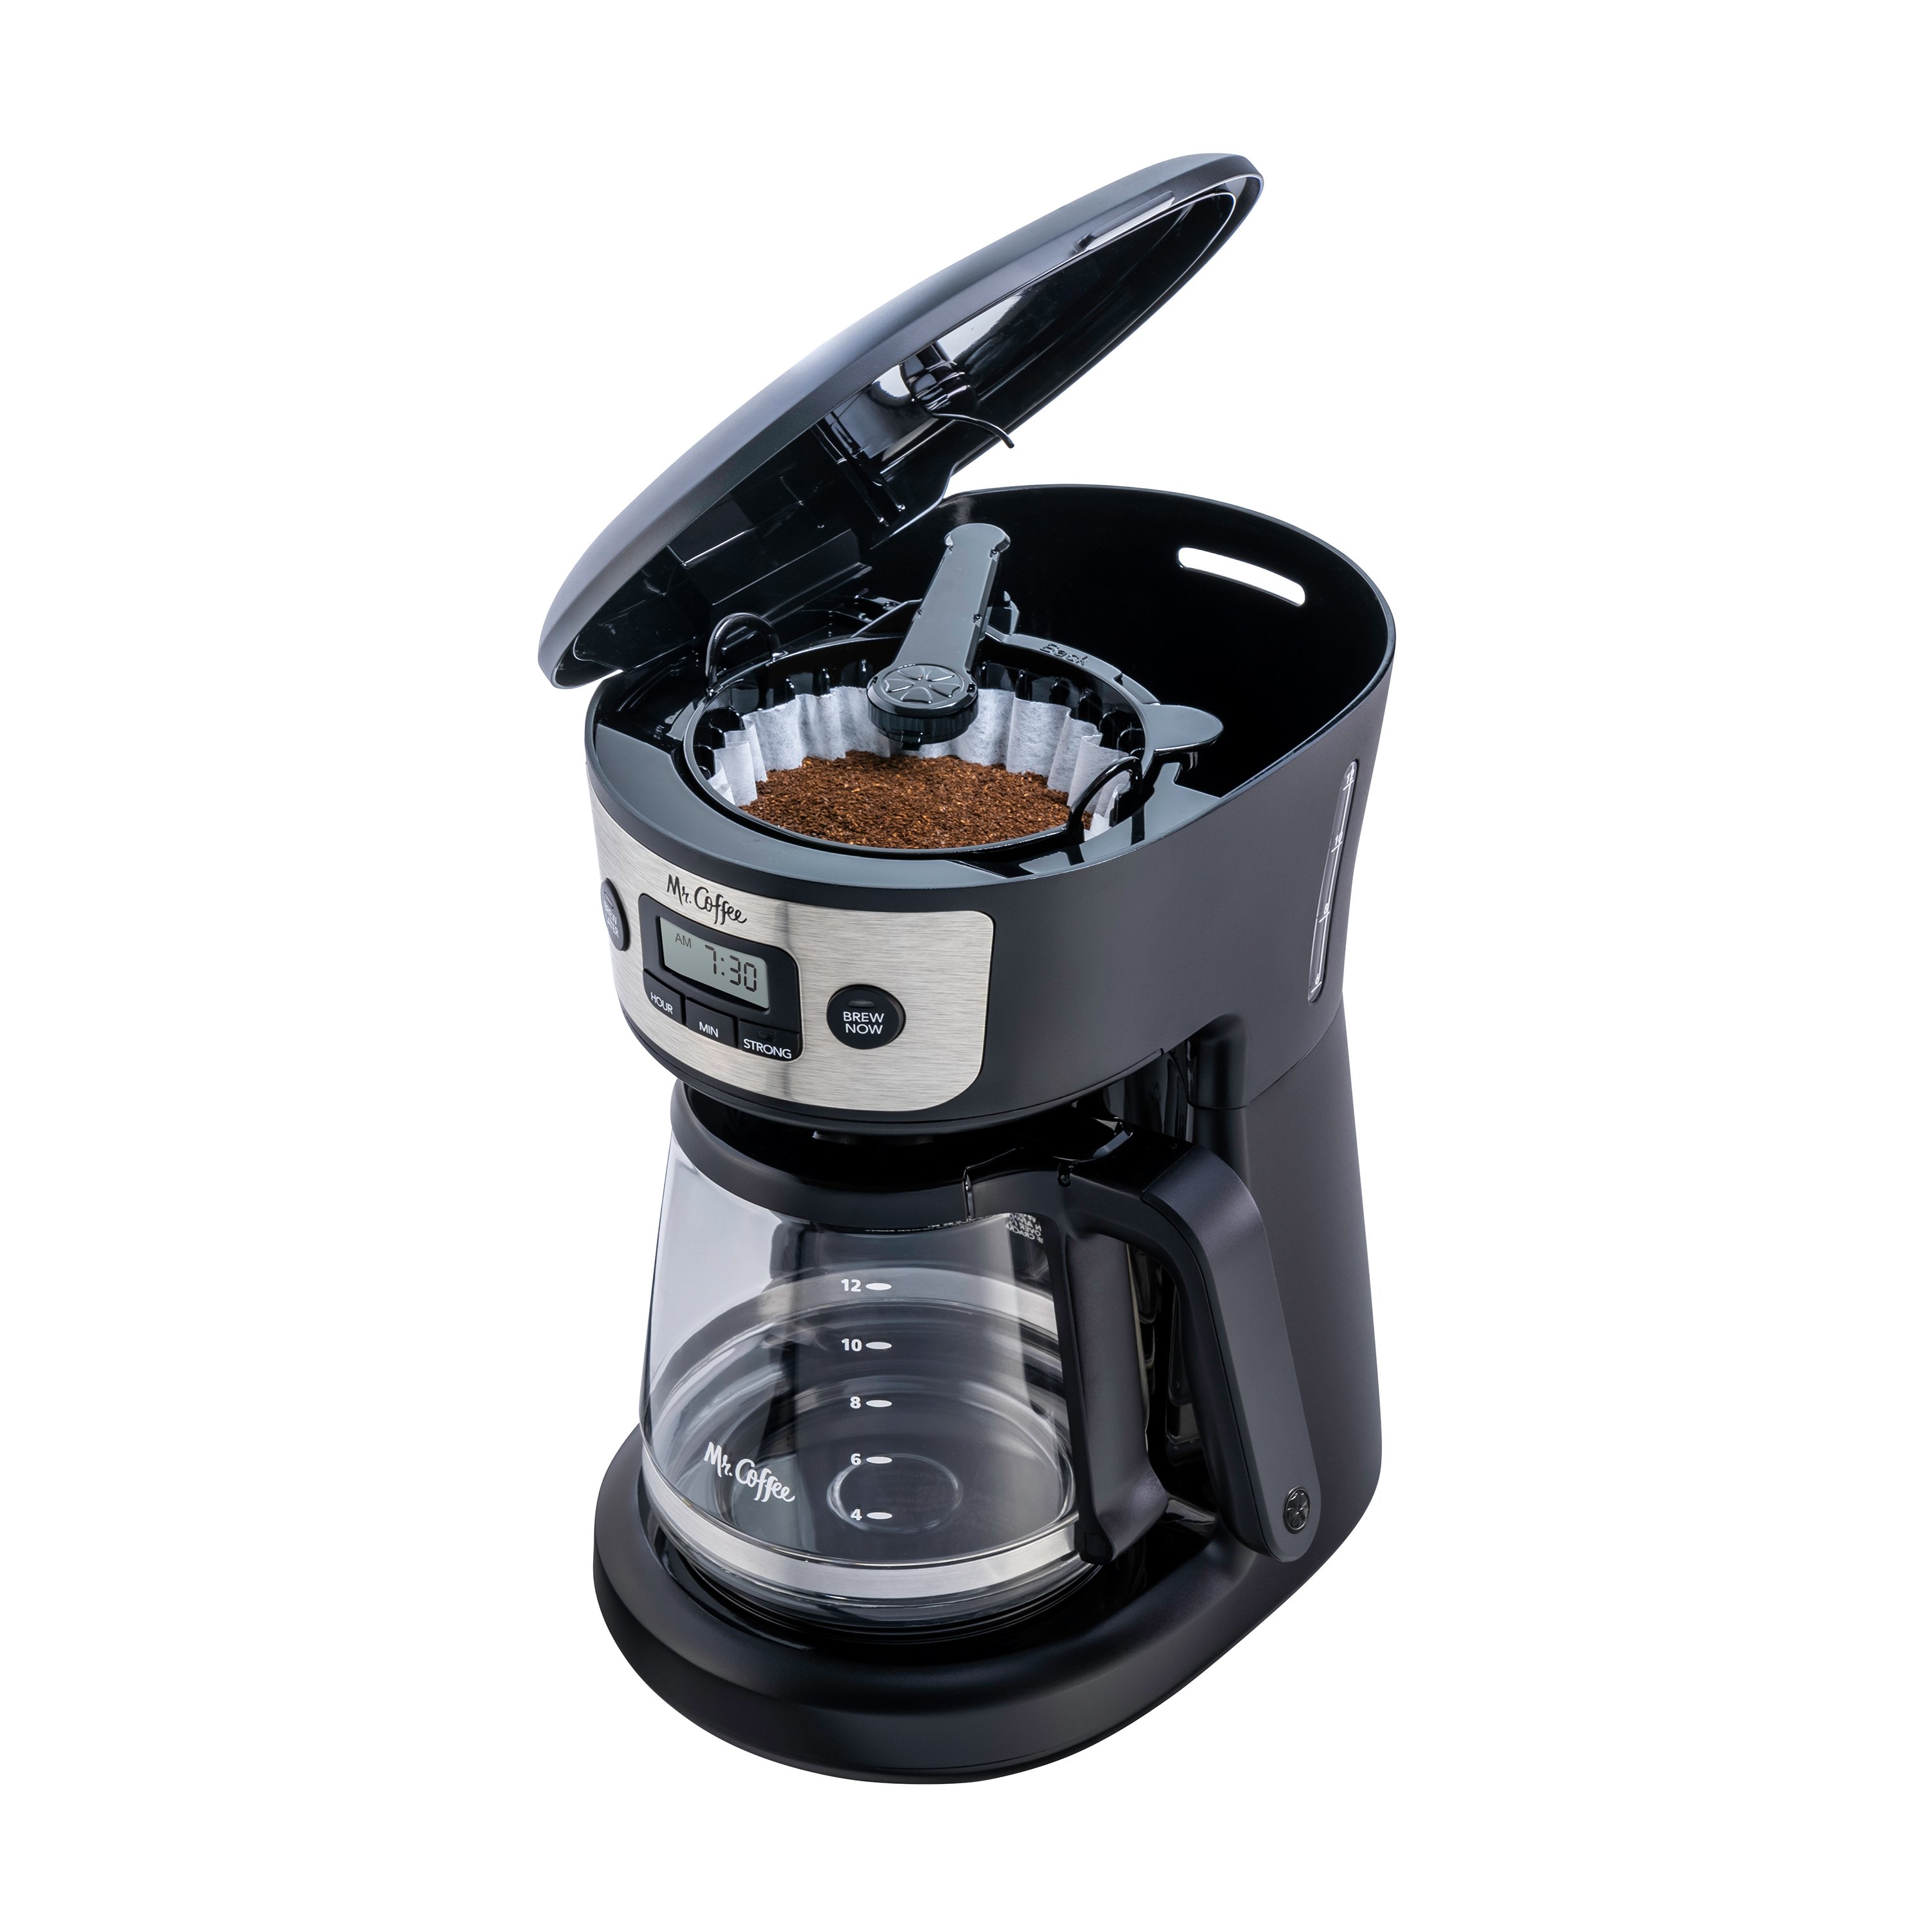 Mr. Coffee® 12-Cup Coffeemaker